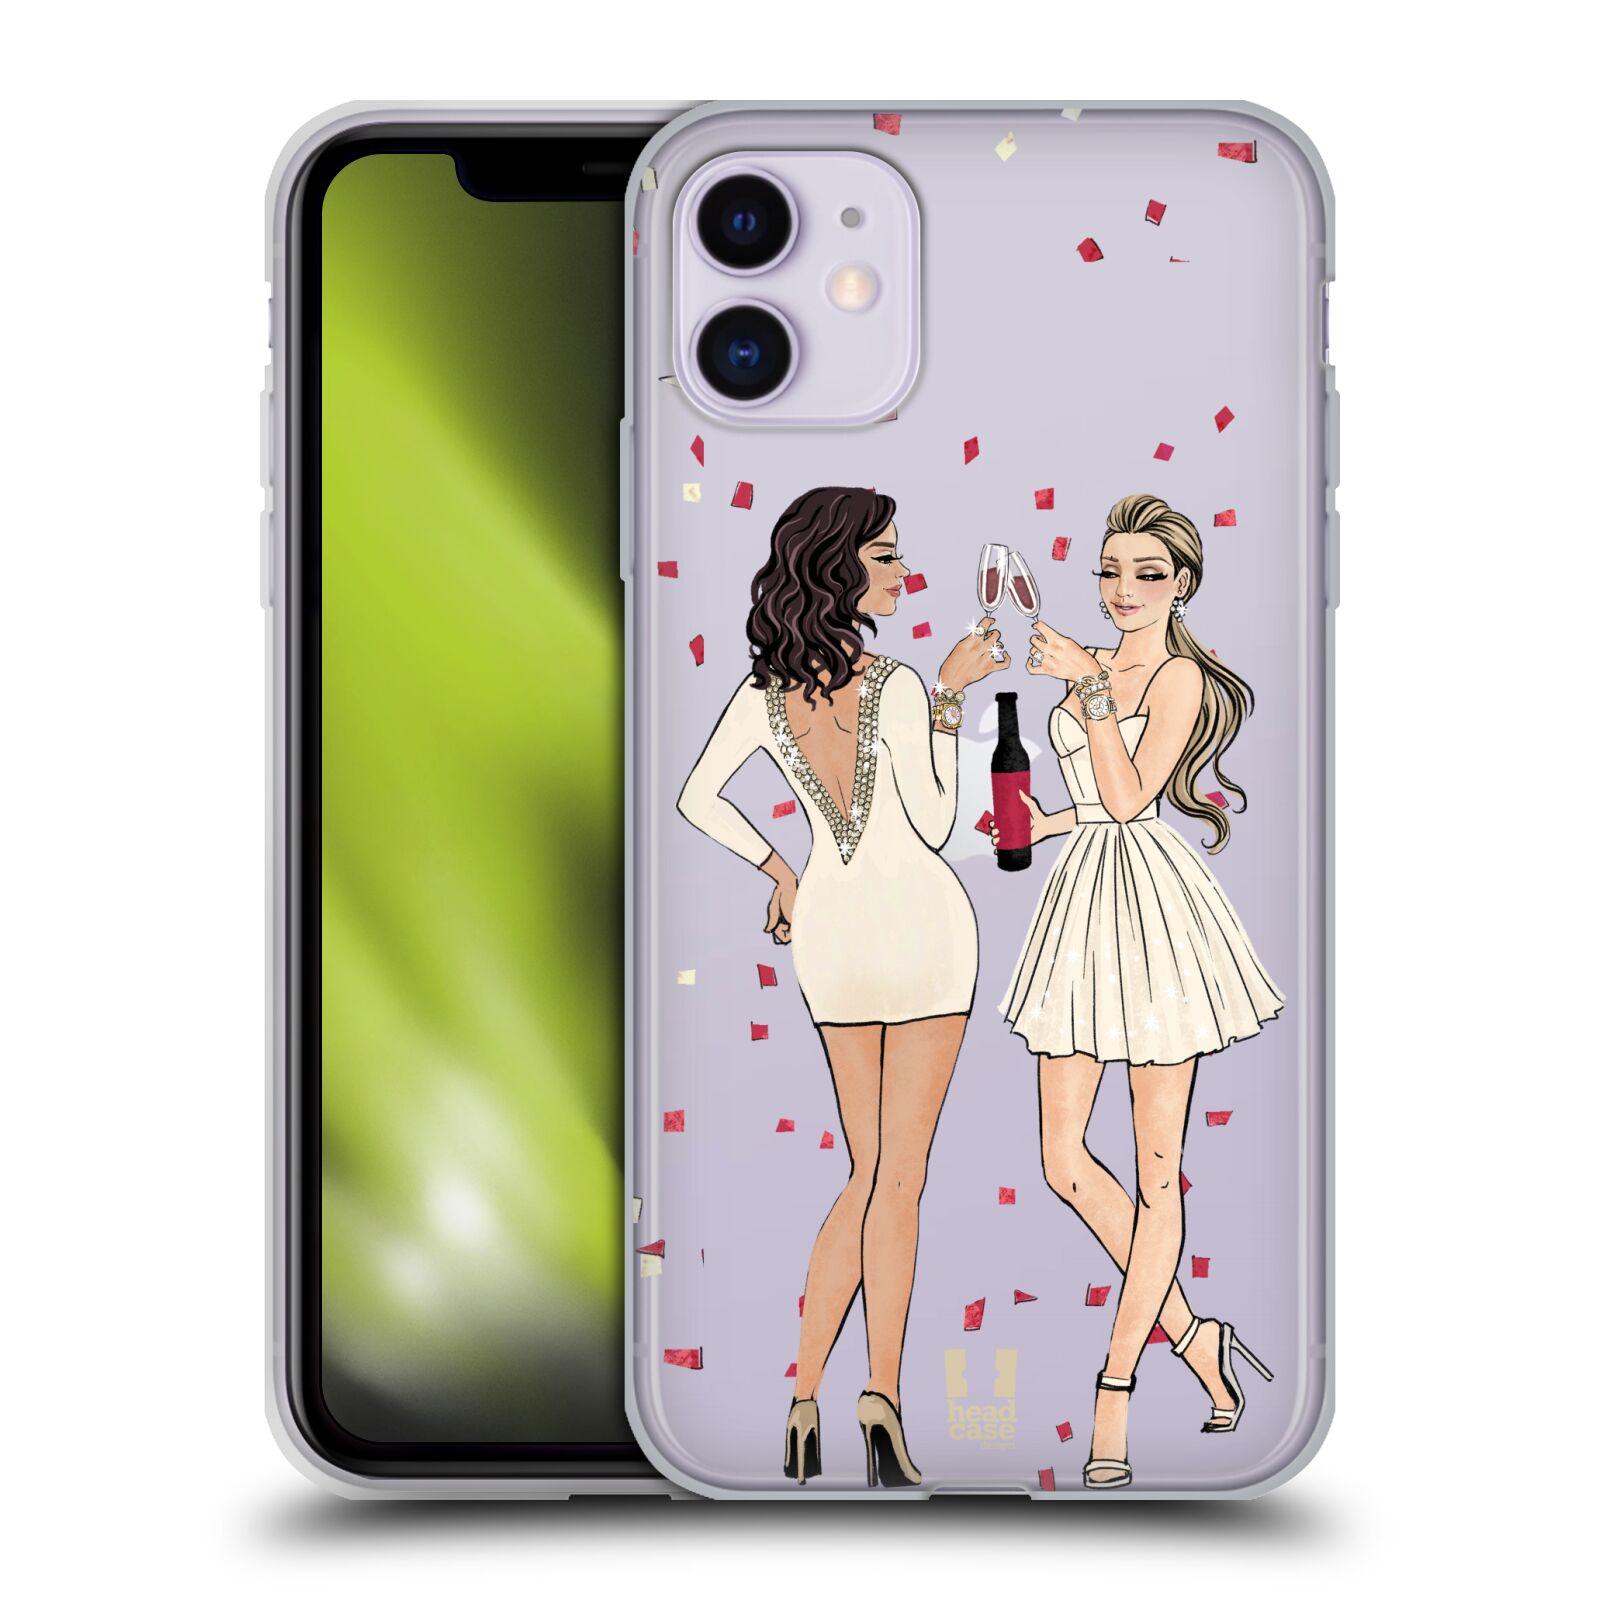 Silikonový obal na mobil Apple Iphone 11 - HEAD CASE - 2 Děvčata a šampaňské